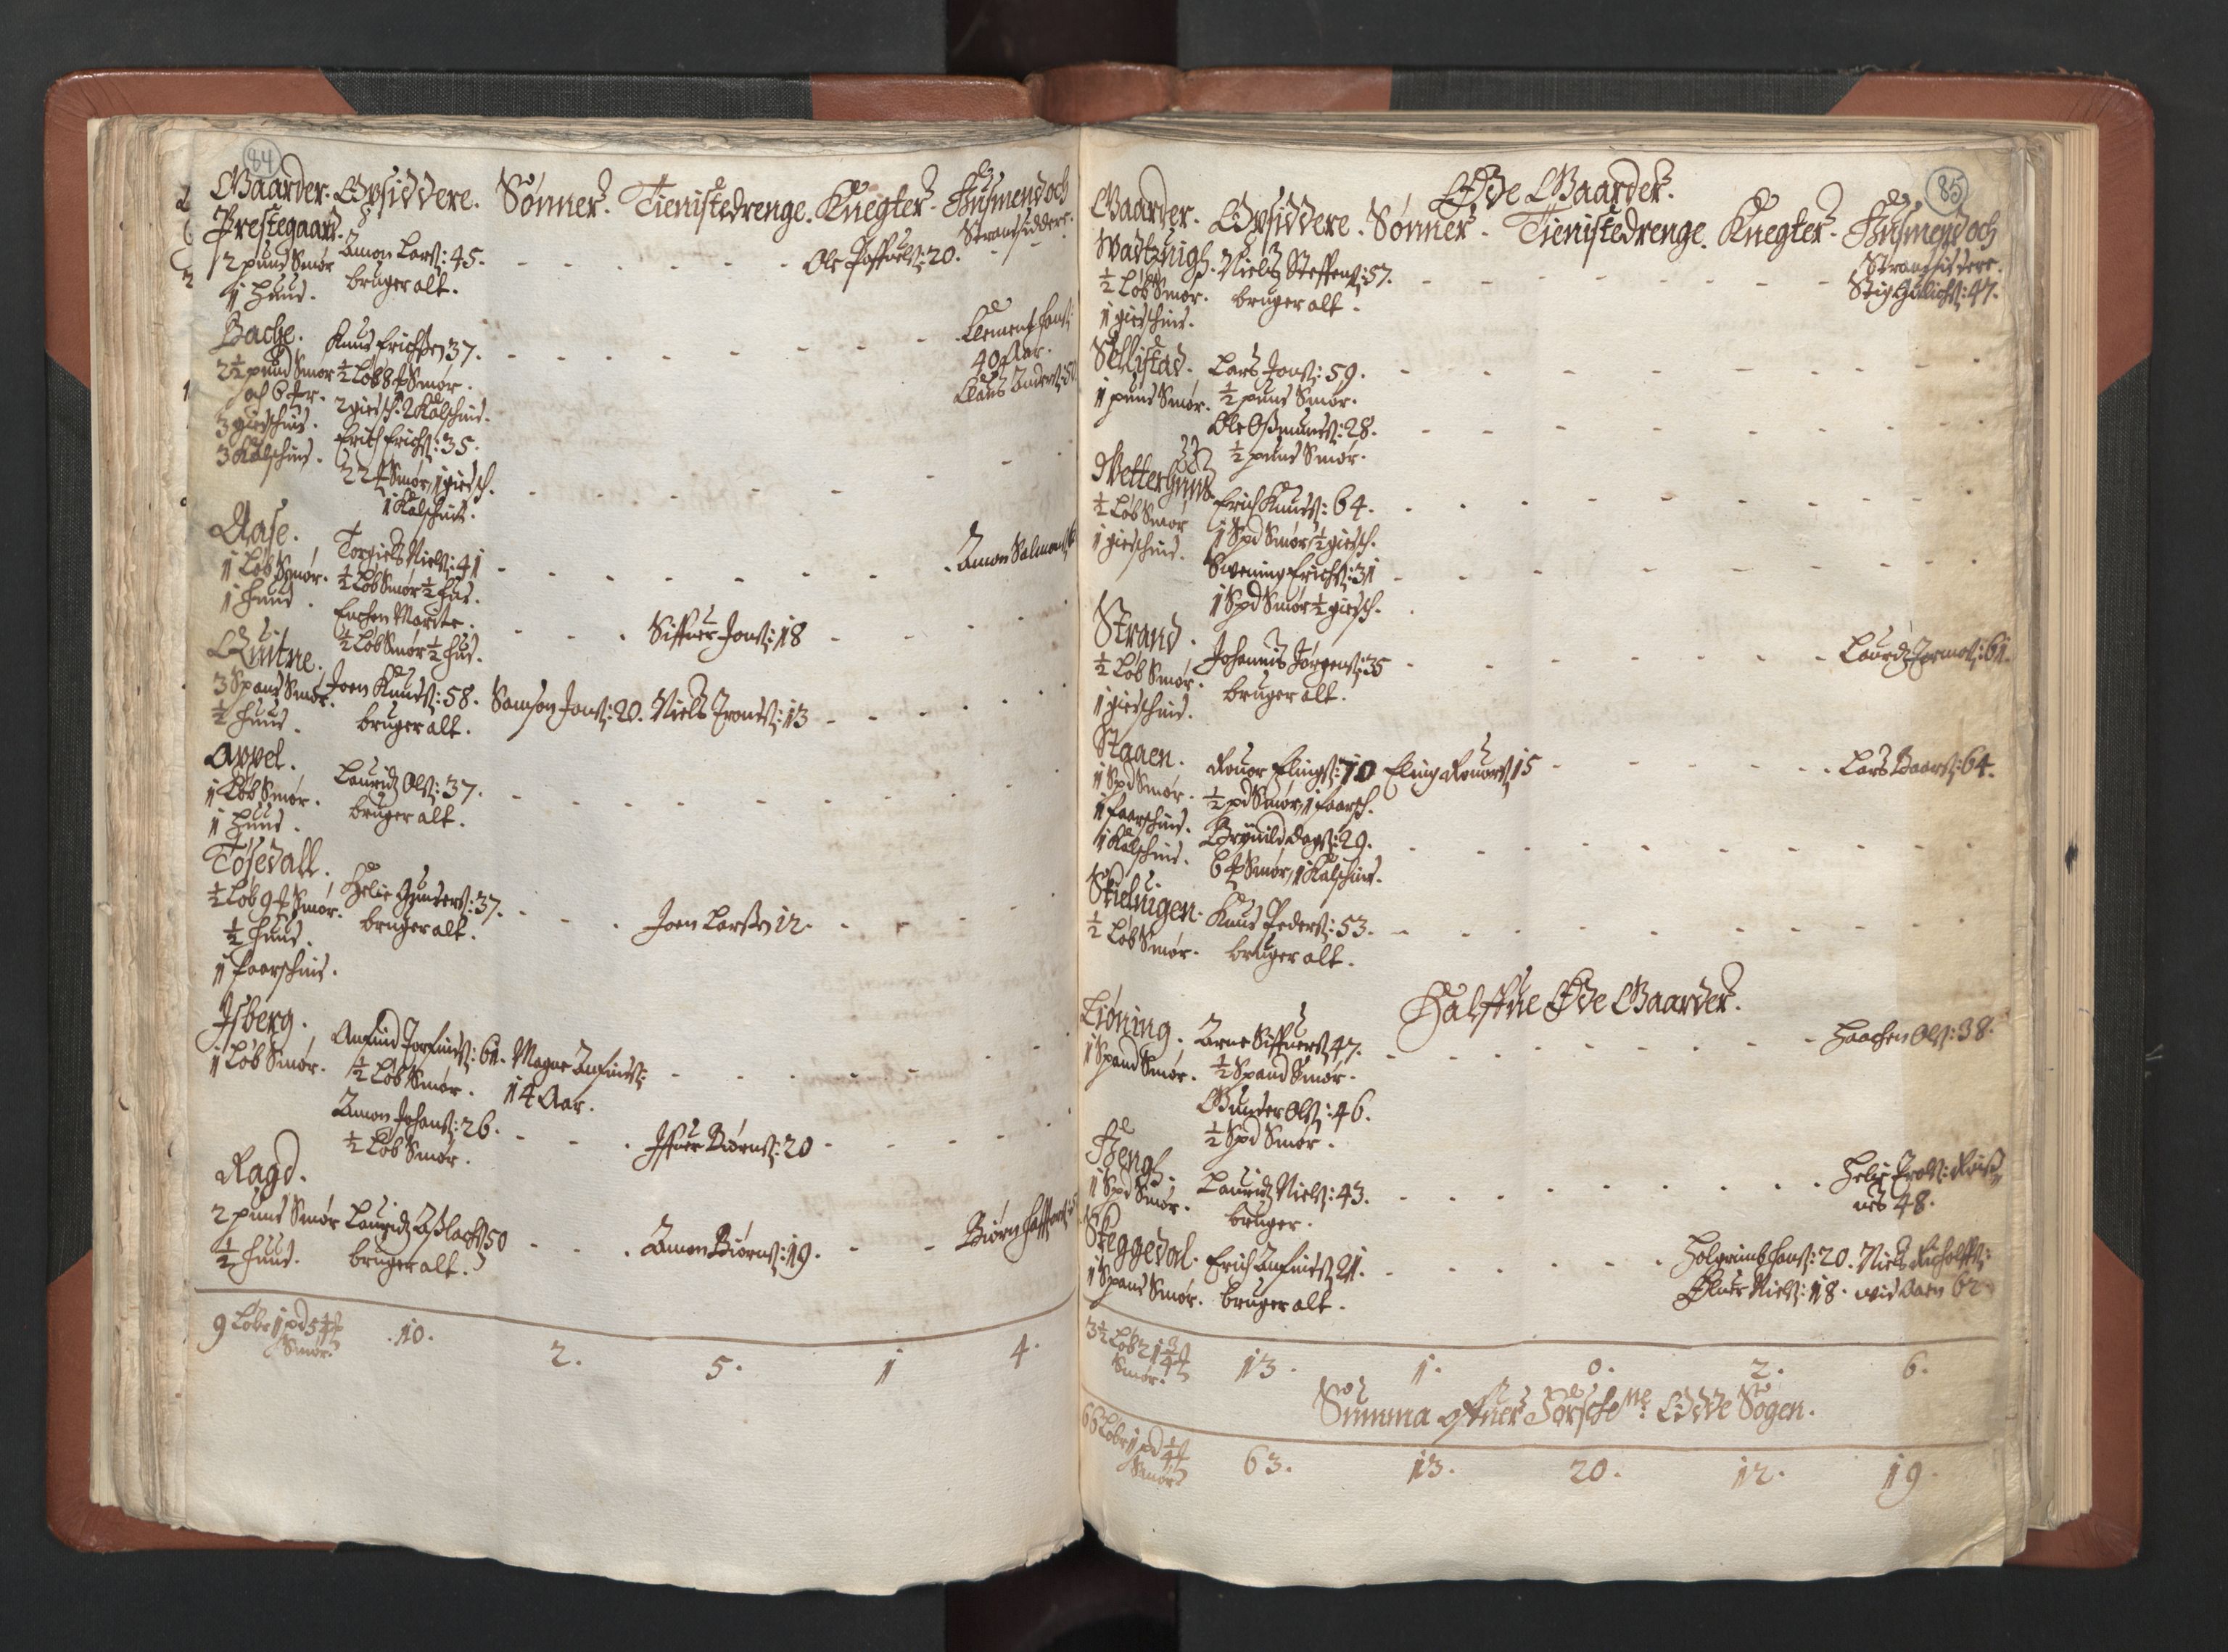 RA, Fogdenes og sorenskrivernes manntall 1664-1666, nr. 14: Hardanger len, Ytre Sogn fogderi og Indre Sogn fogderi, 1664-1665, s. 84-85